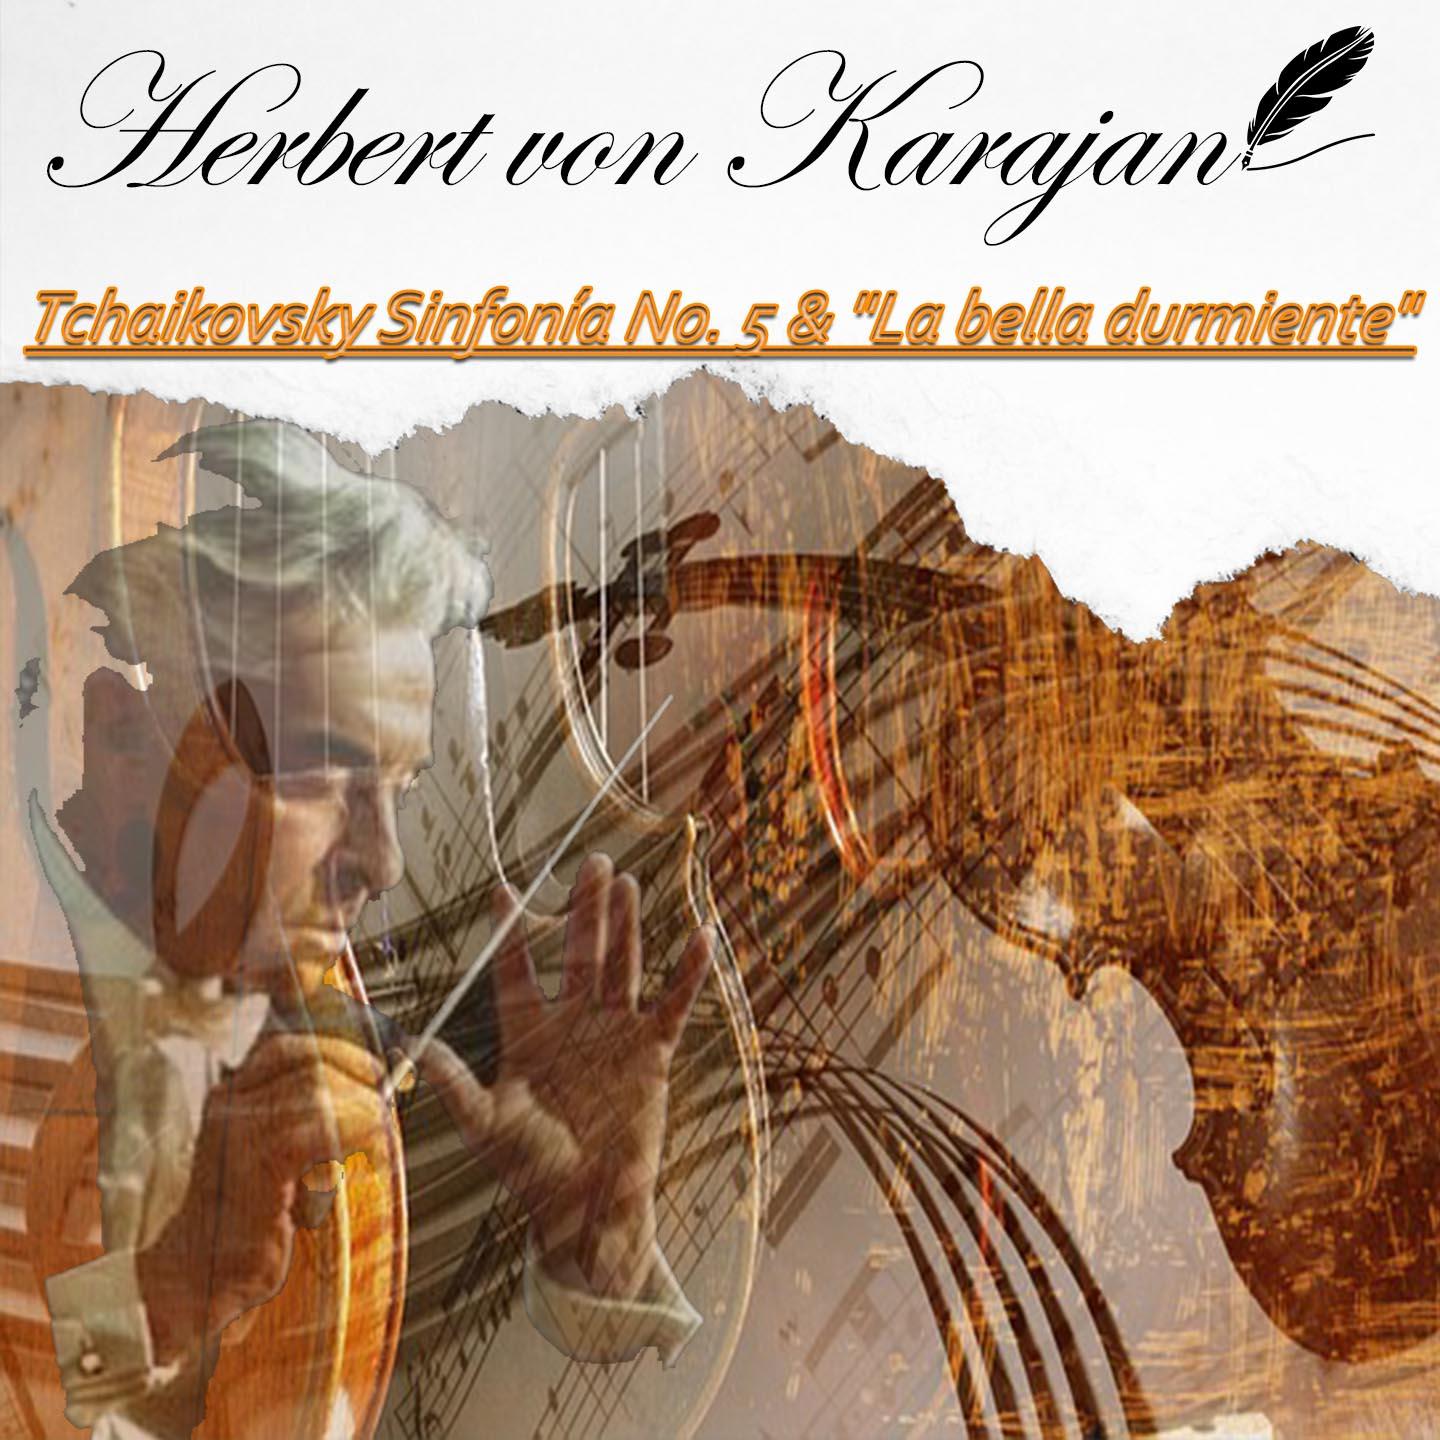 Herbert von Karajan, Tchaikovsky Sinfonía No. 5 & "La bella durmiente"